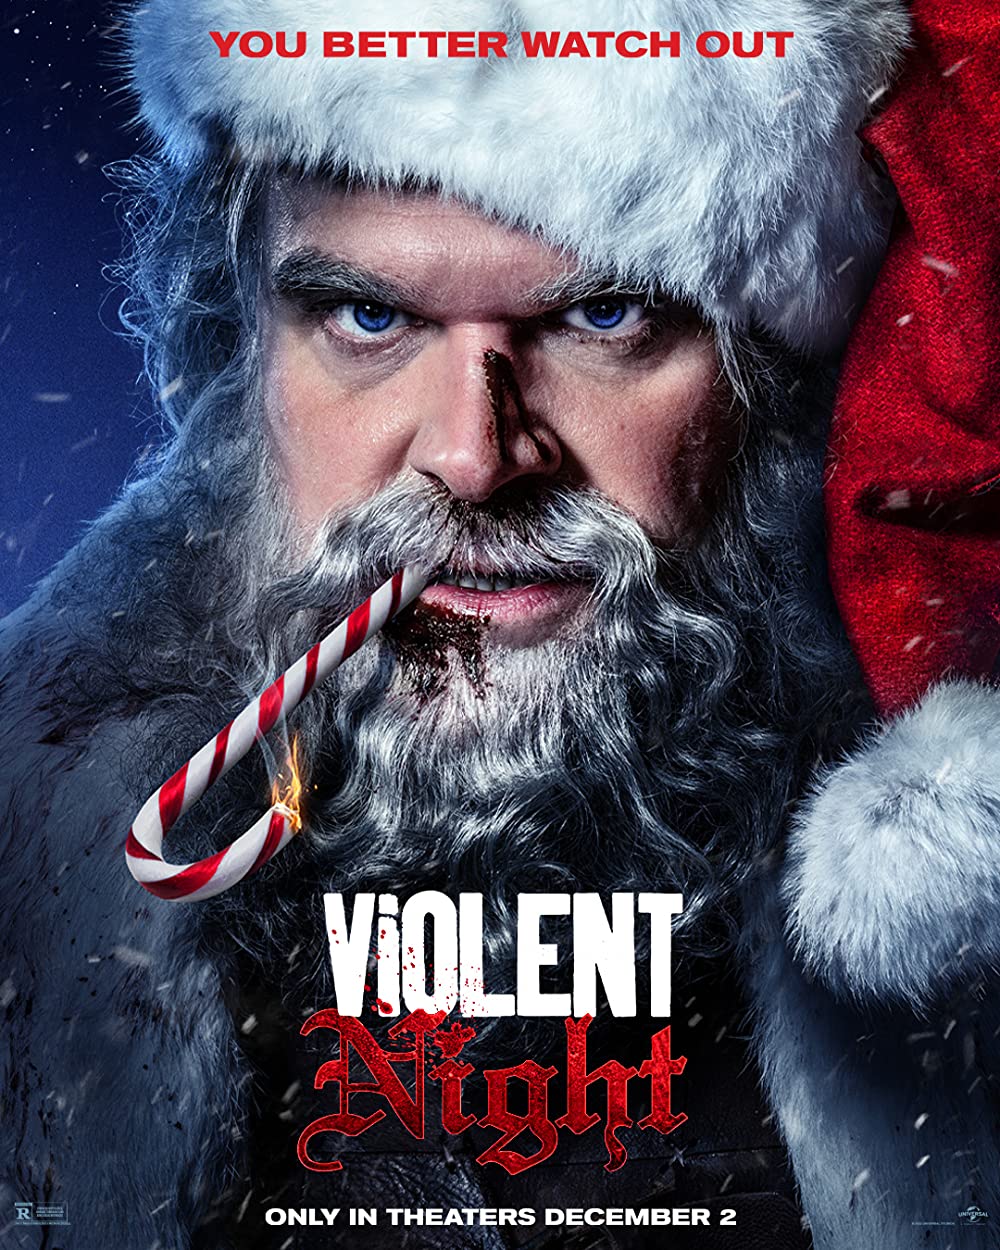 Movie Poster: Violent Night